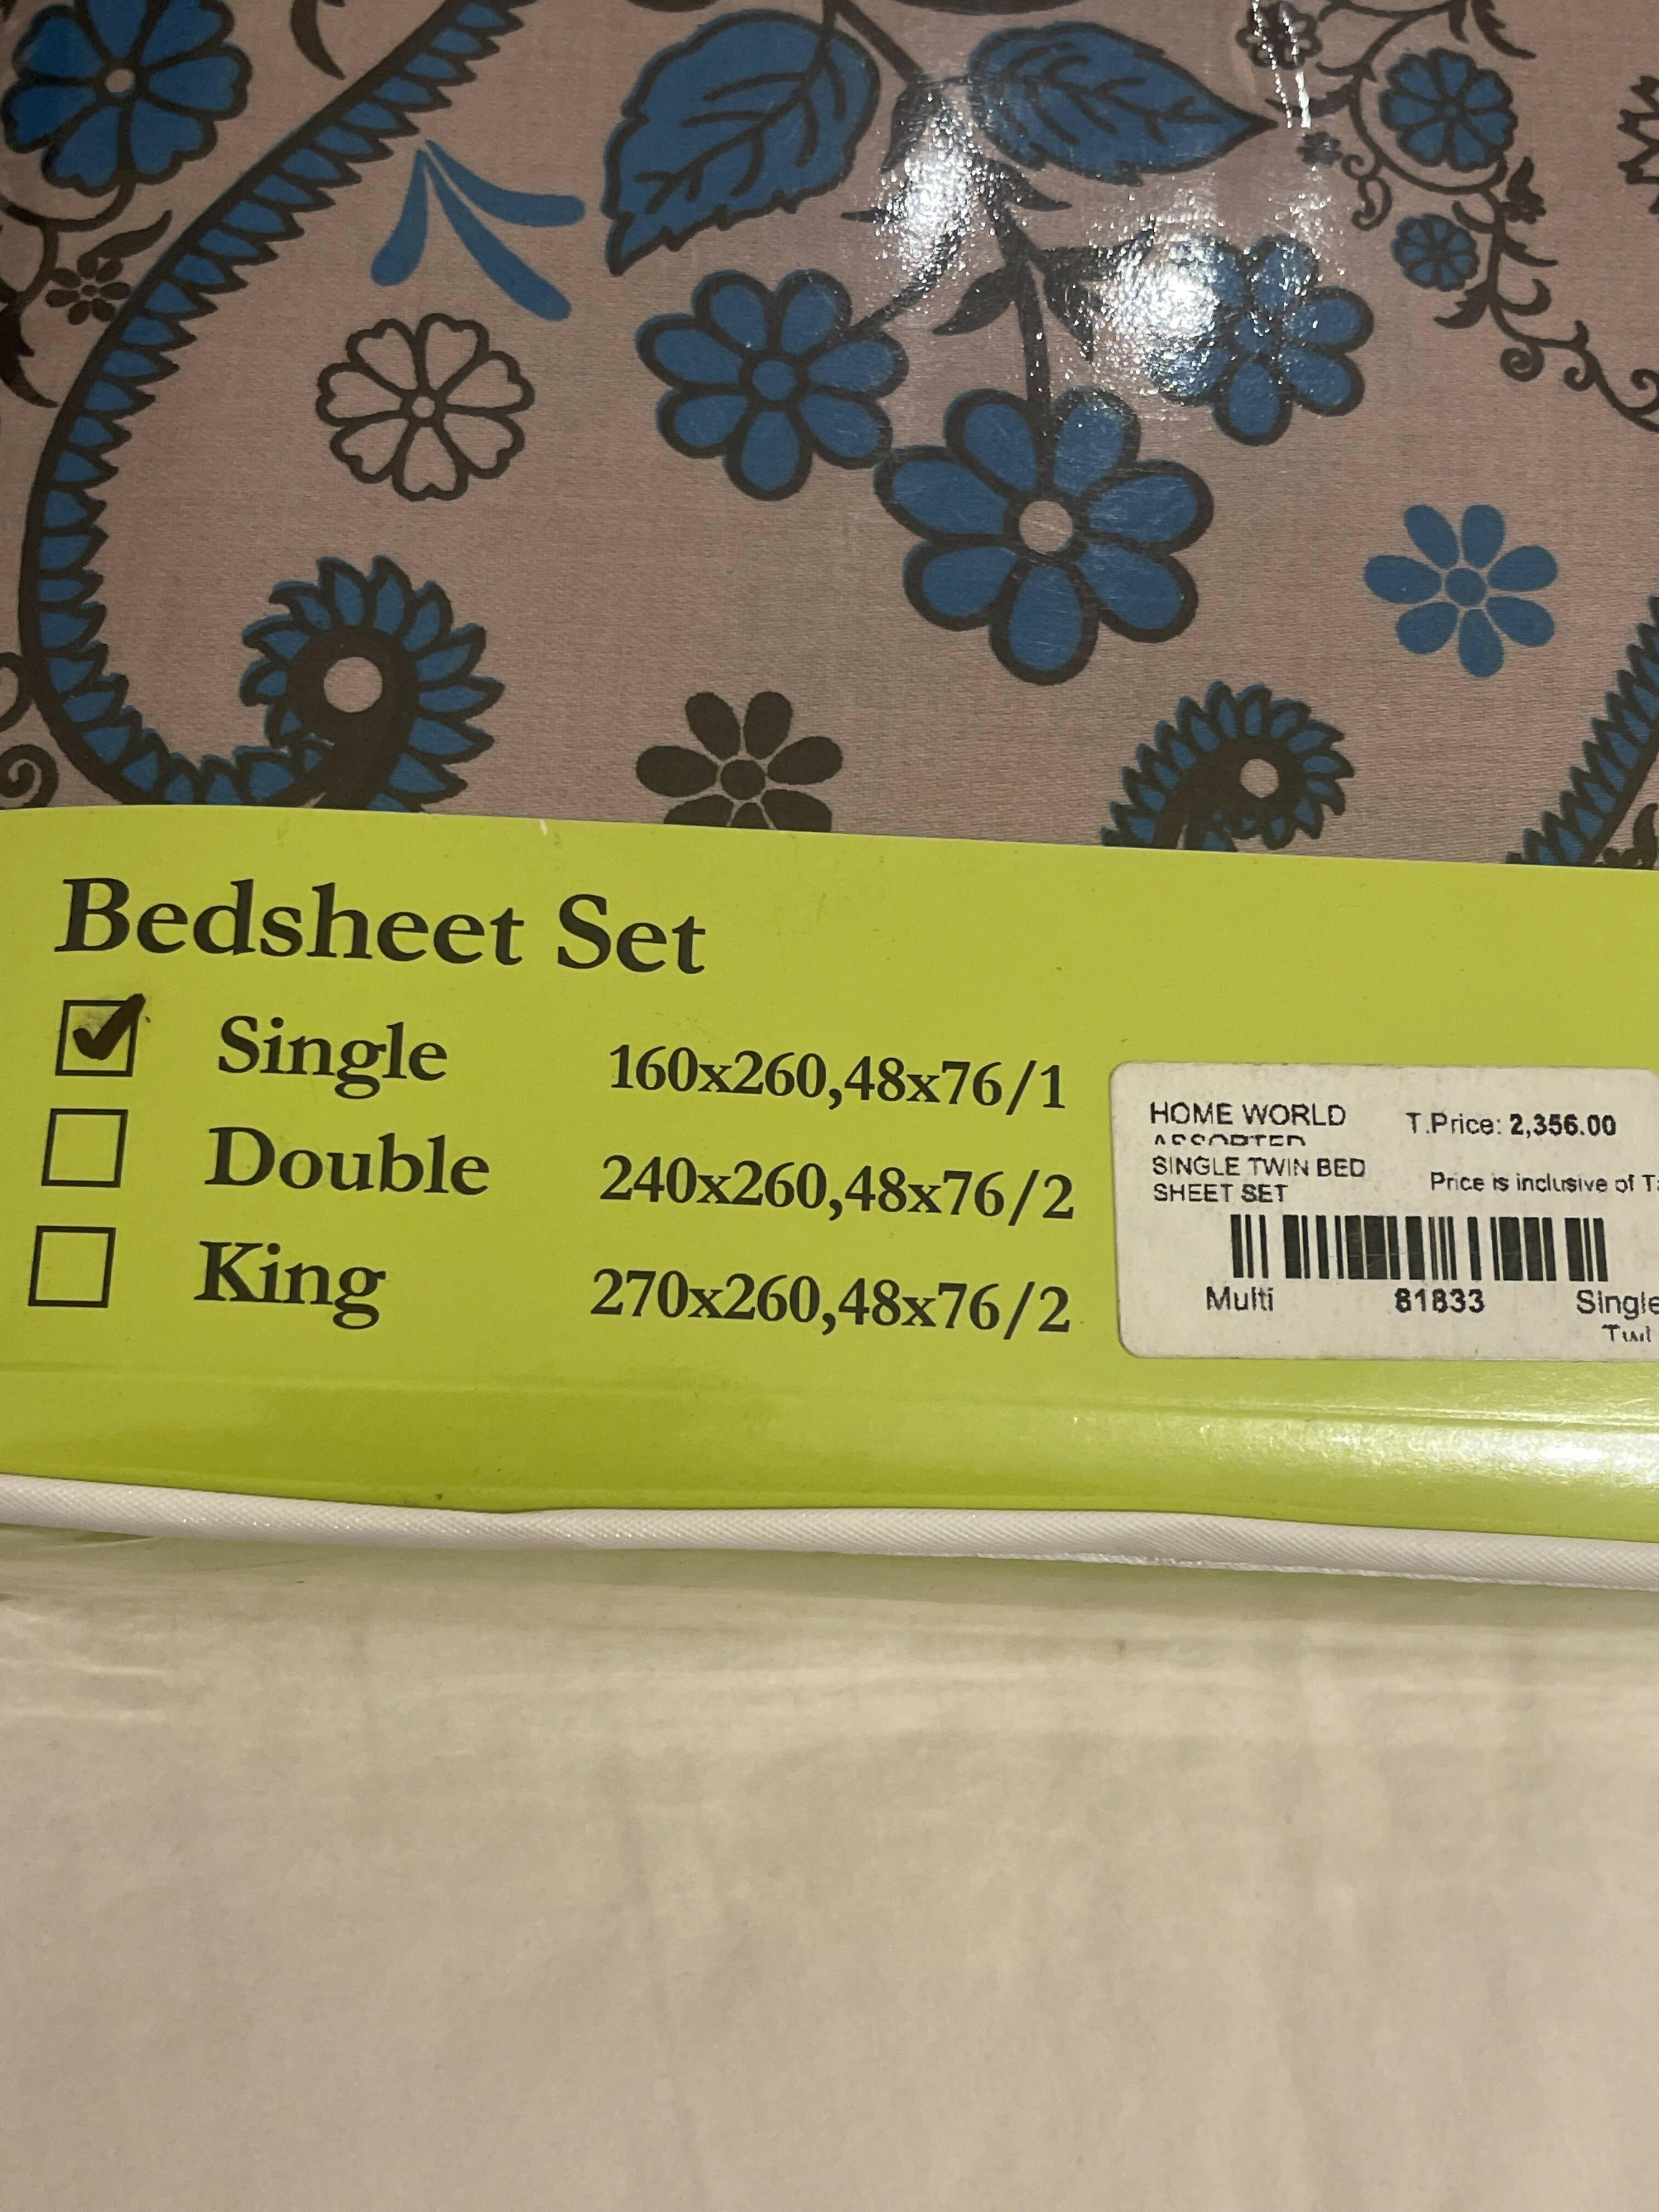 Ideas | 2 Single Bedsheets | New